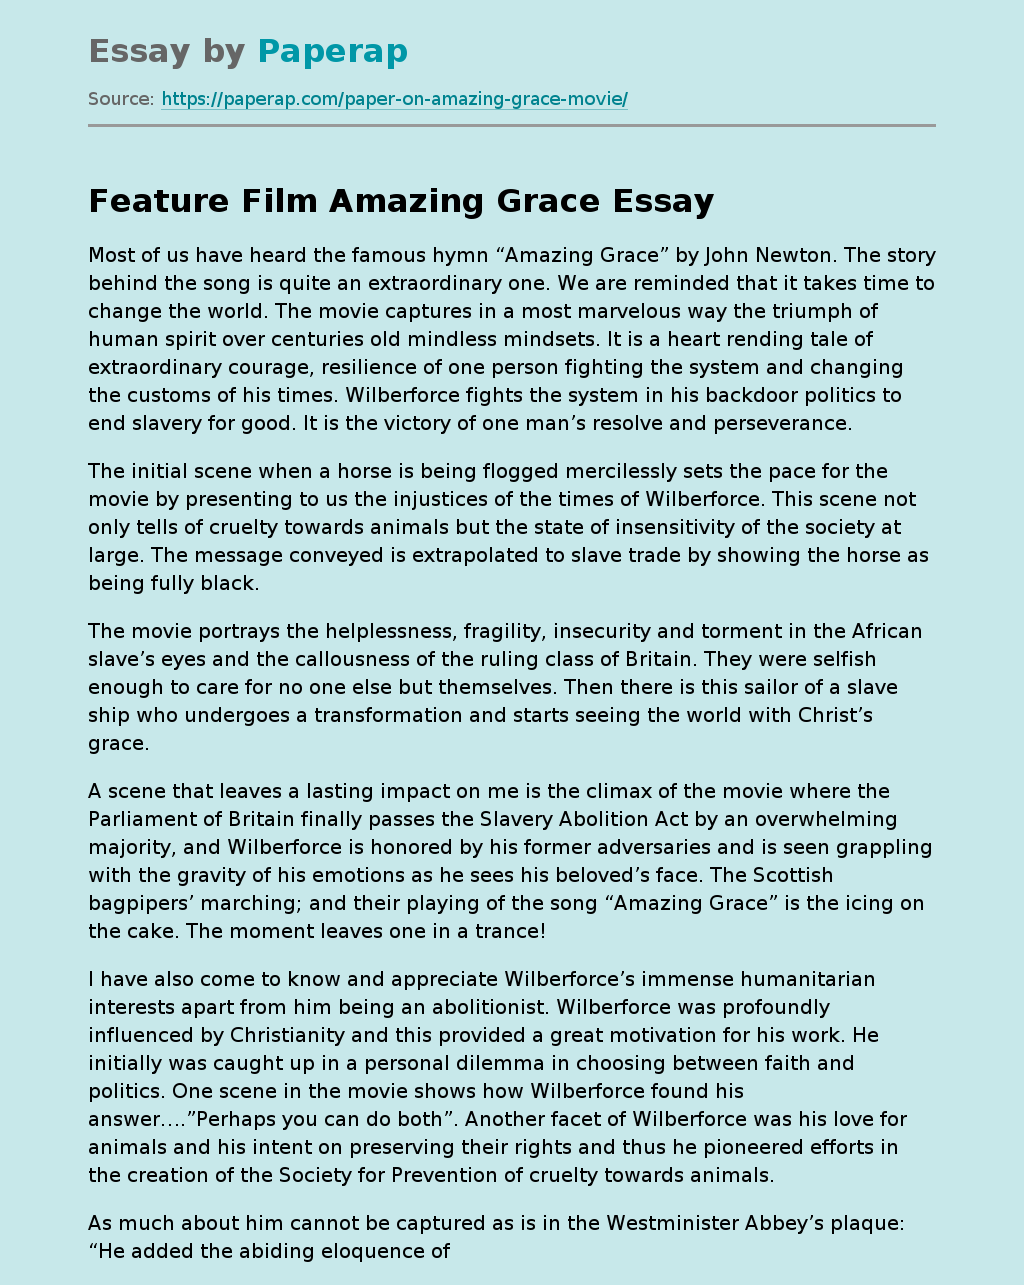 Feature Film Amazing Grace